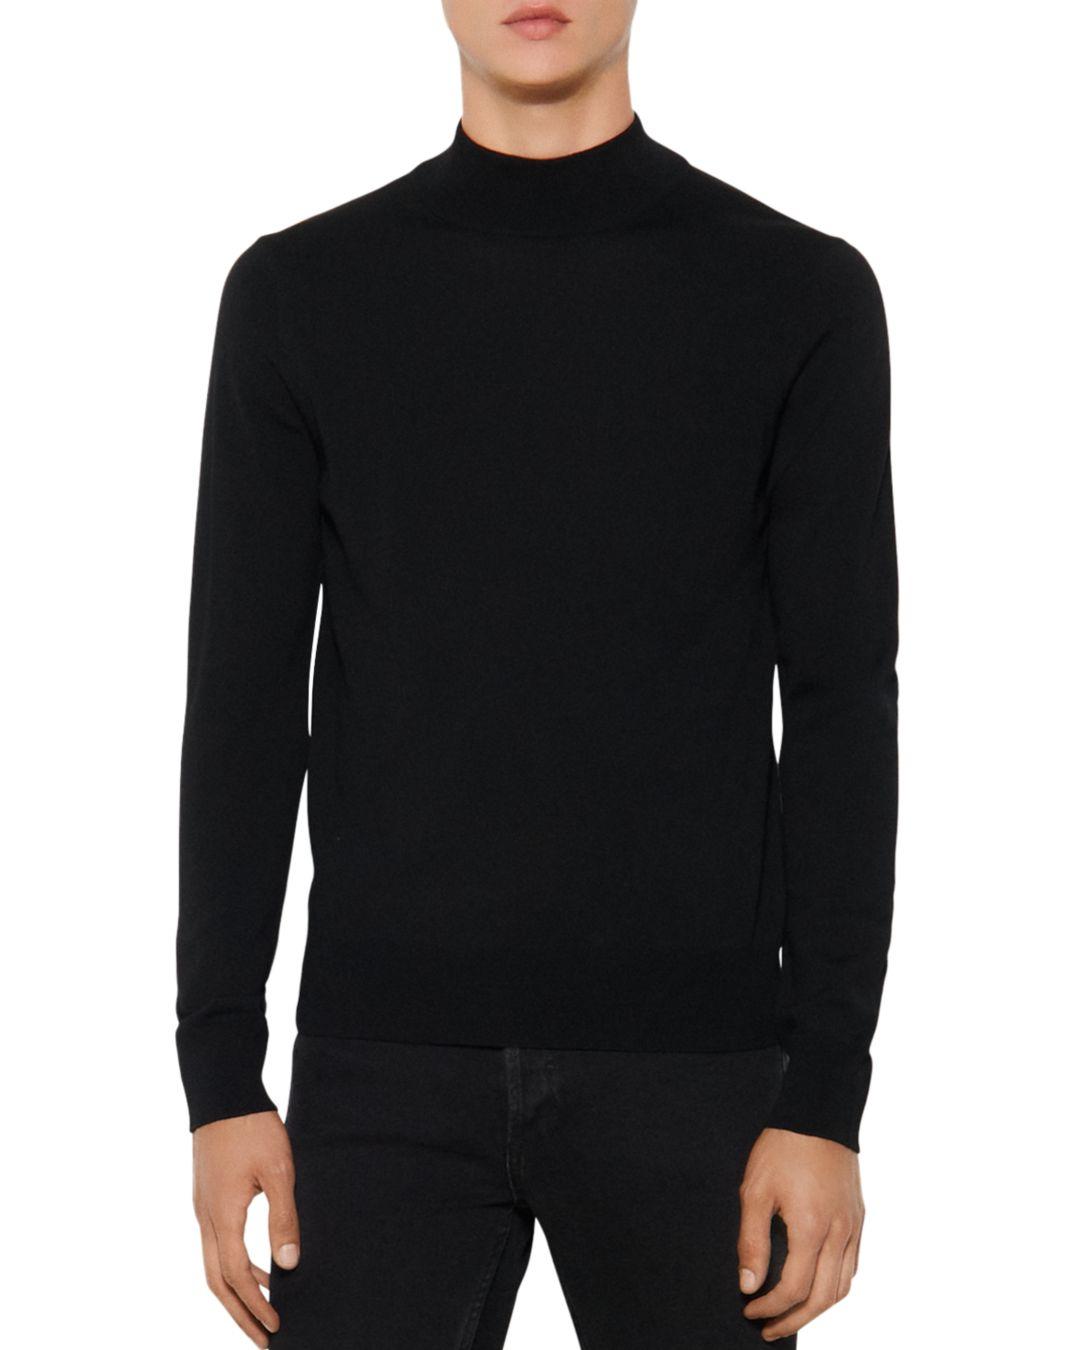 Sandro Wool Industrial Slim Fit Sweater in Black for Men - Lyst